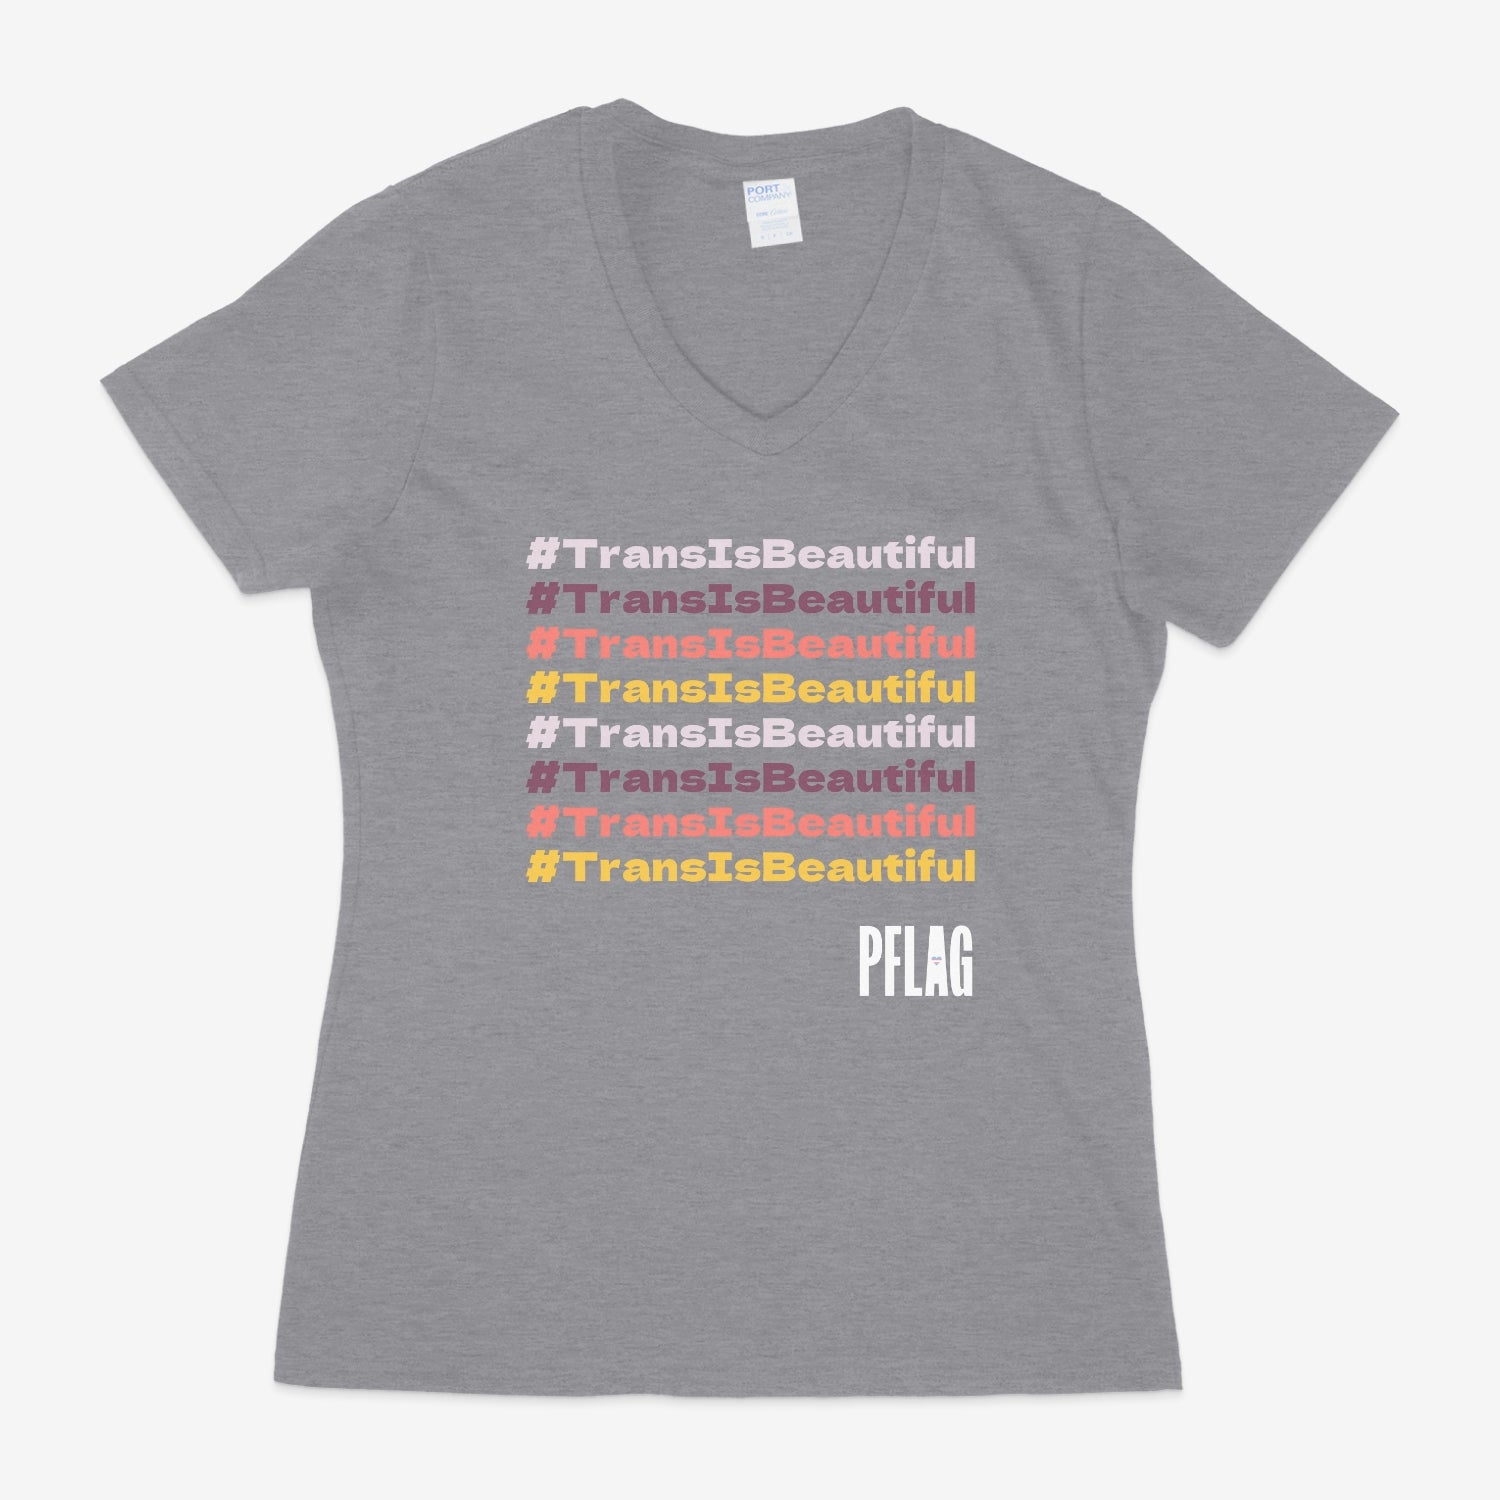 #TransIsBeautiful - Fitted-Cut V-Neck Short Sleeve T-Shirt